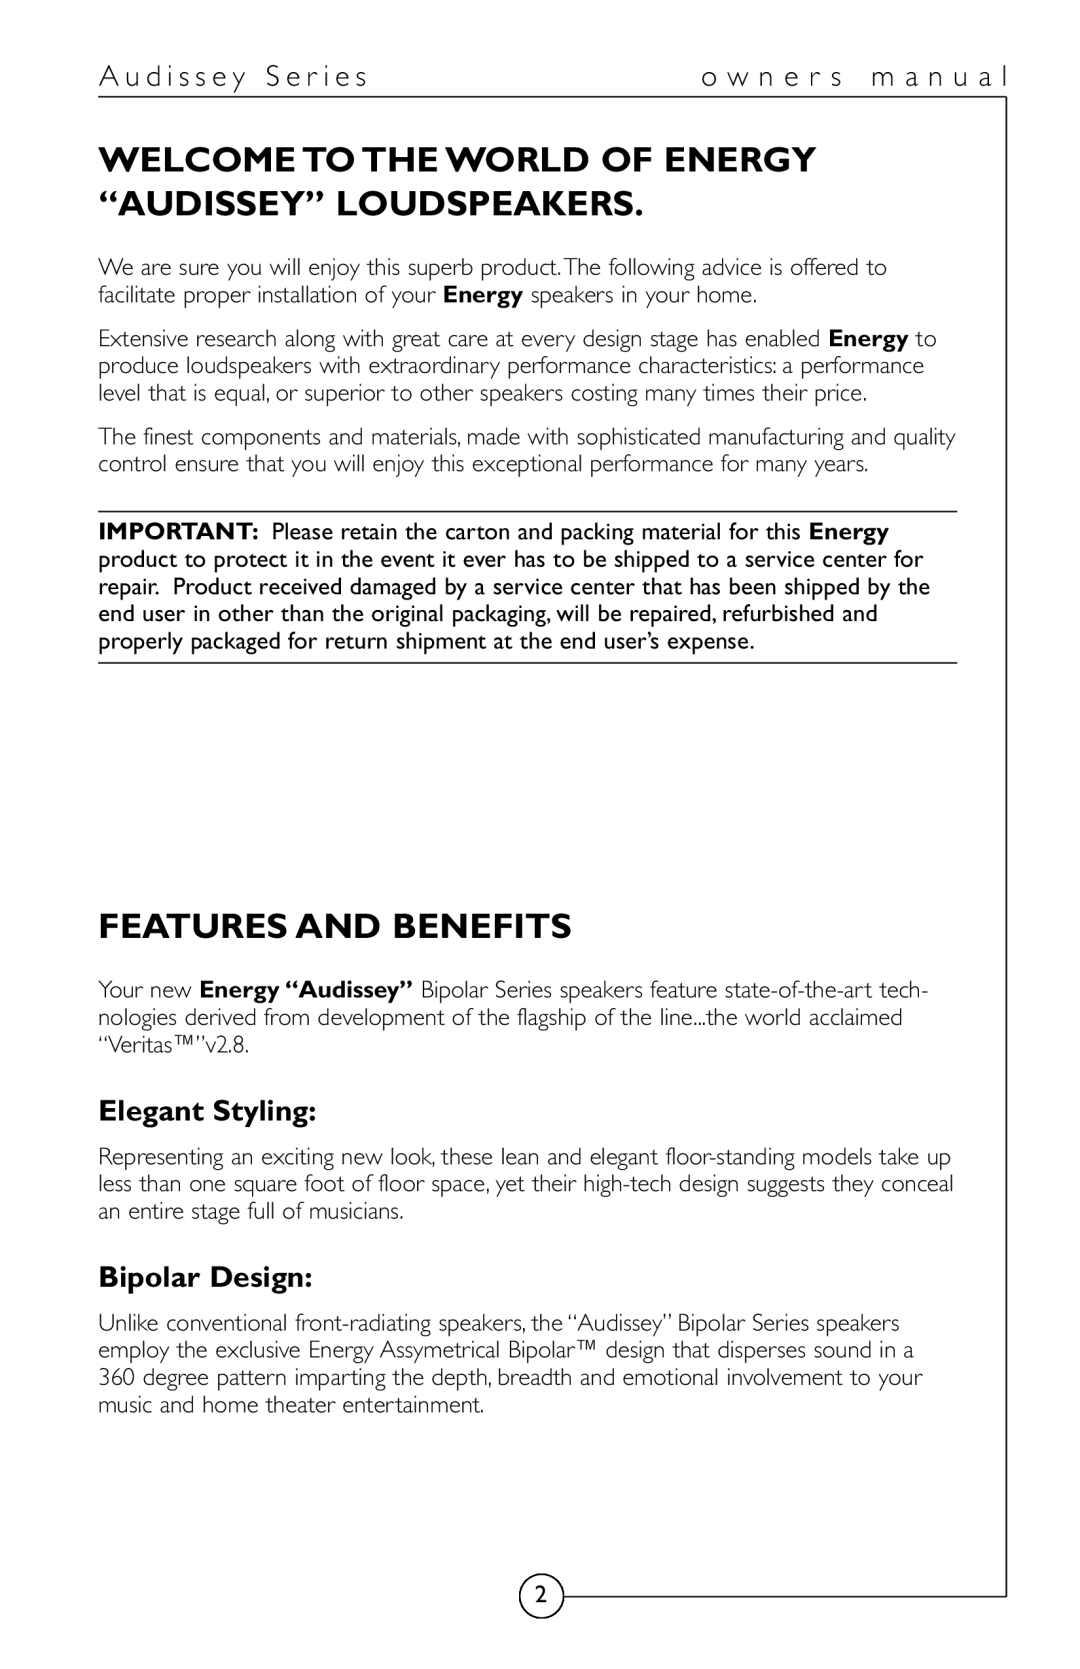 Energy Speaker Systems Audissey Series Features And Benefits, A u d i s s e y S e r i e s, Elegant Styling, Bipolar Design 